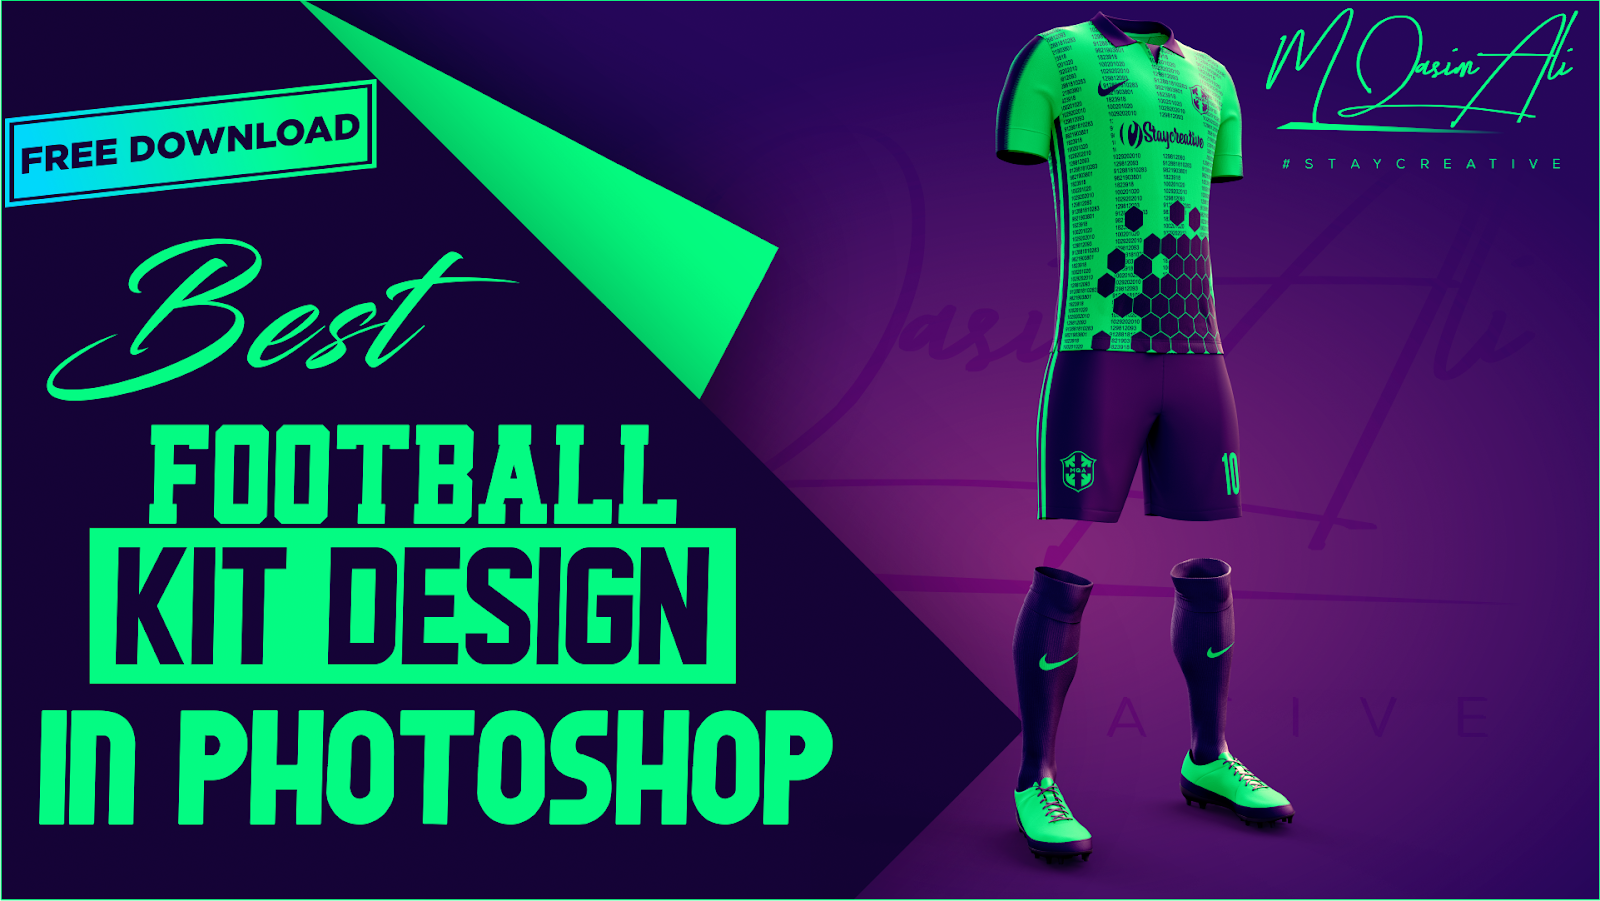 Download Best Football Kit Design Tutorial + Free Yellow Image Mockup by M Qasim Ali - M Qasim Ali